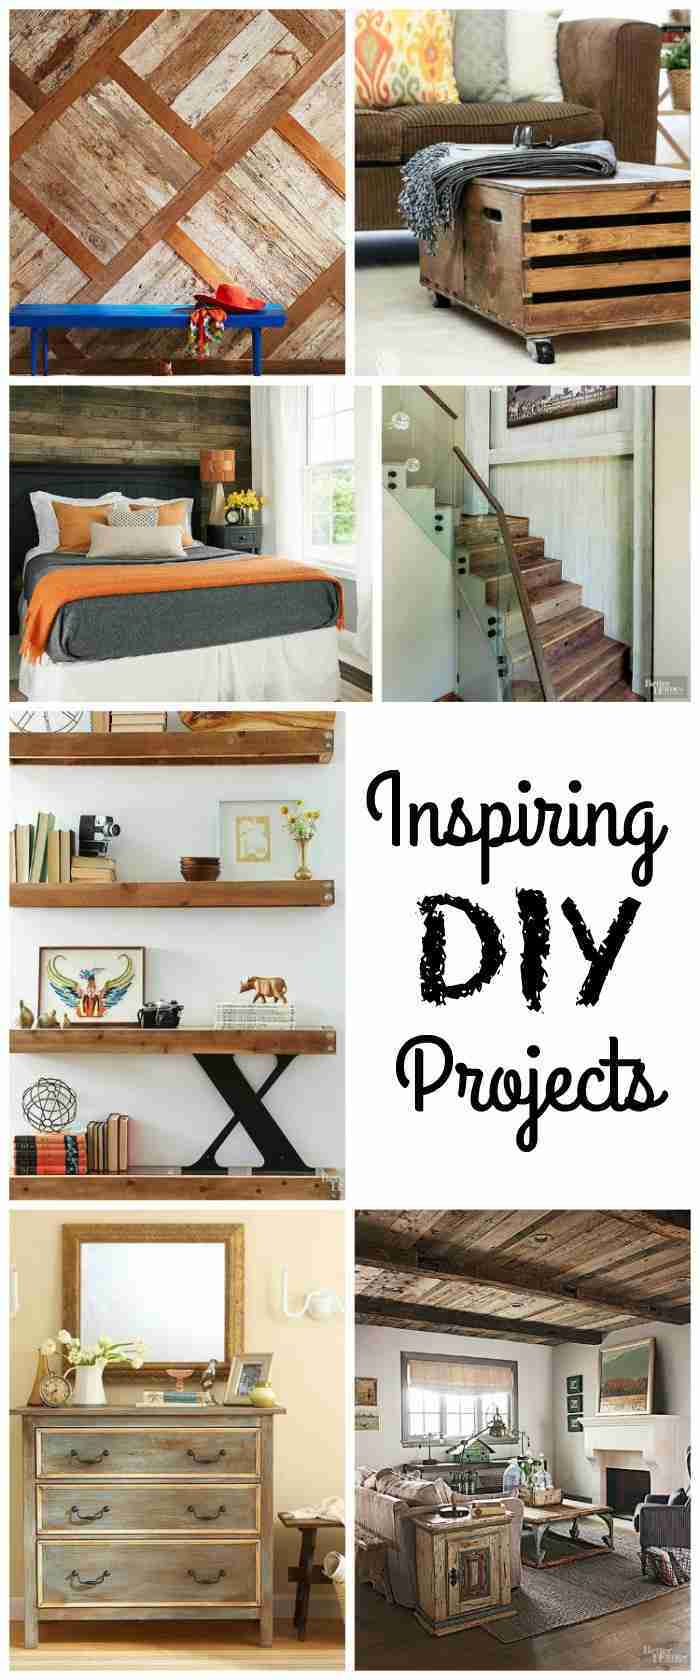 Inspiring Home Decor Ideas | The Mindful Shopper